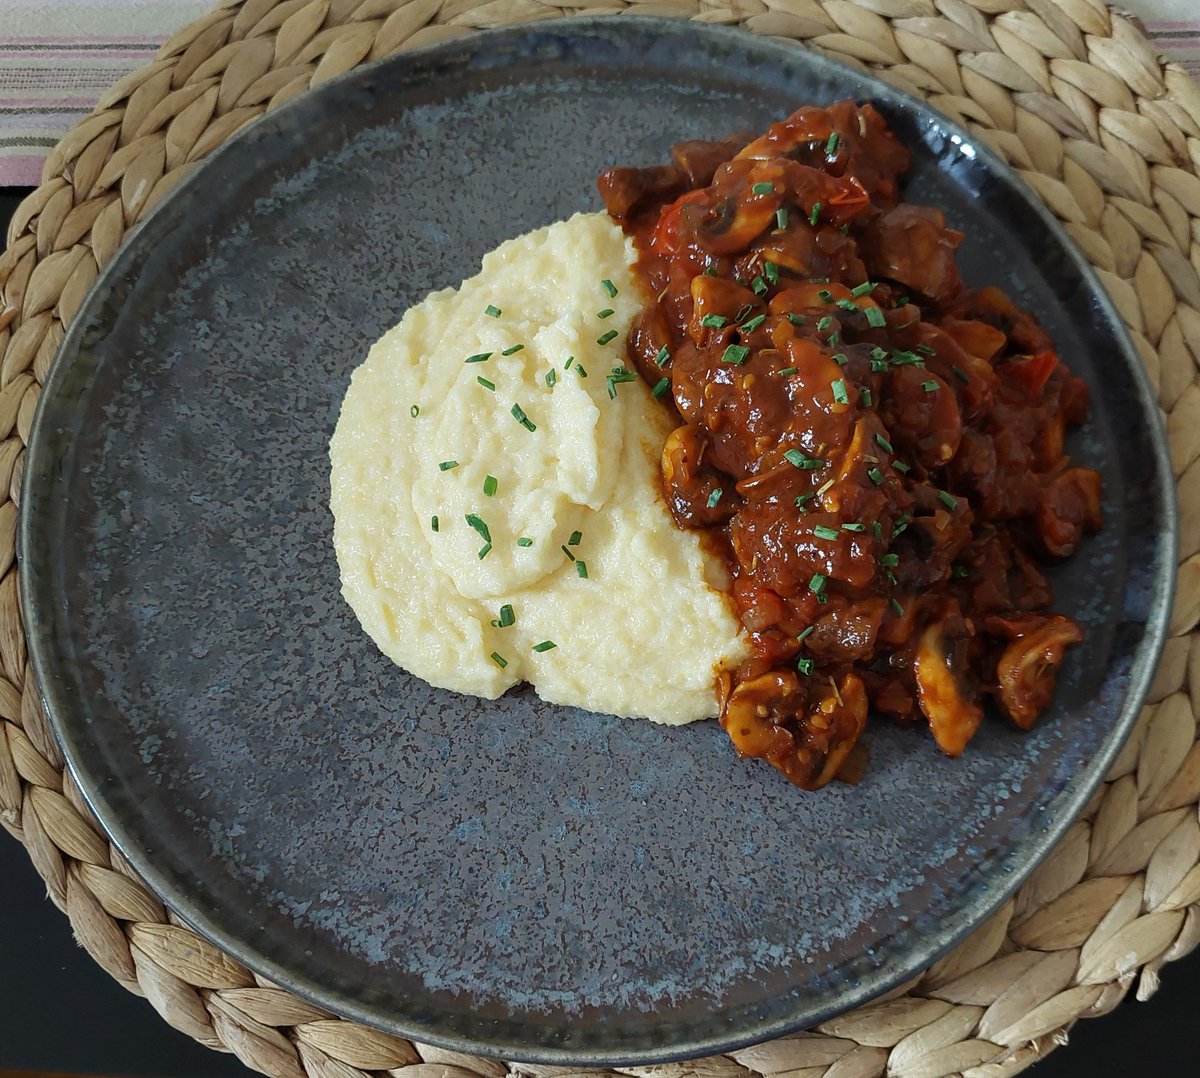 Cremige Polenta mit Parmesan,  dazu ein Pilzragout . 

#food #vegetarian #foodphotography #foodphoto #goveggie #kochen #foodblog #foodblogger